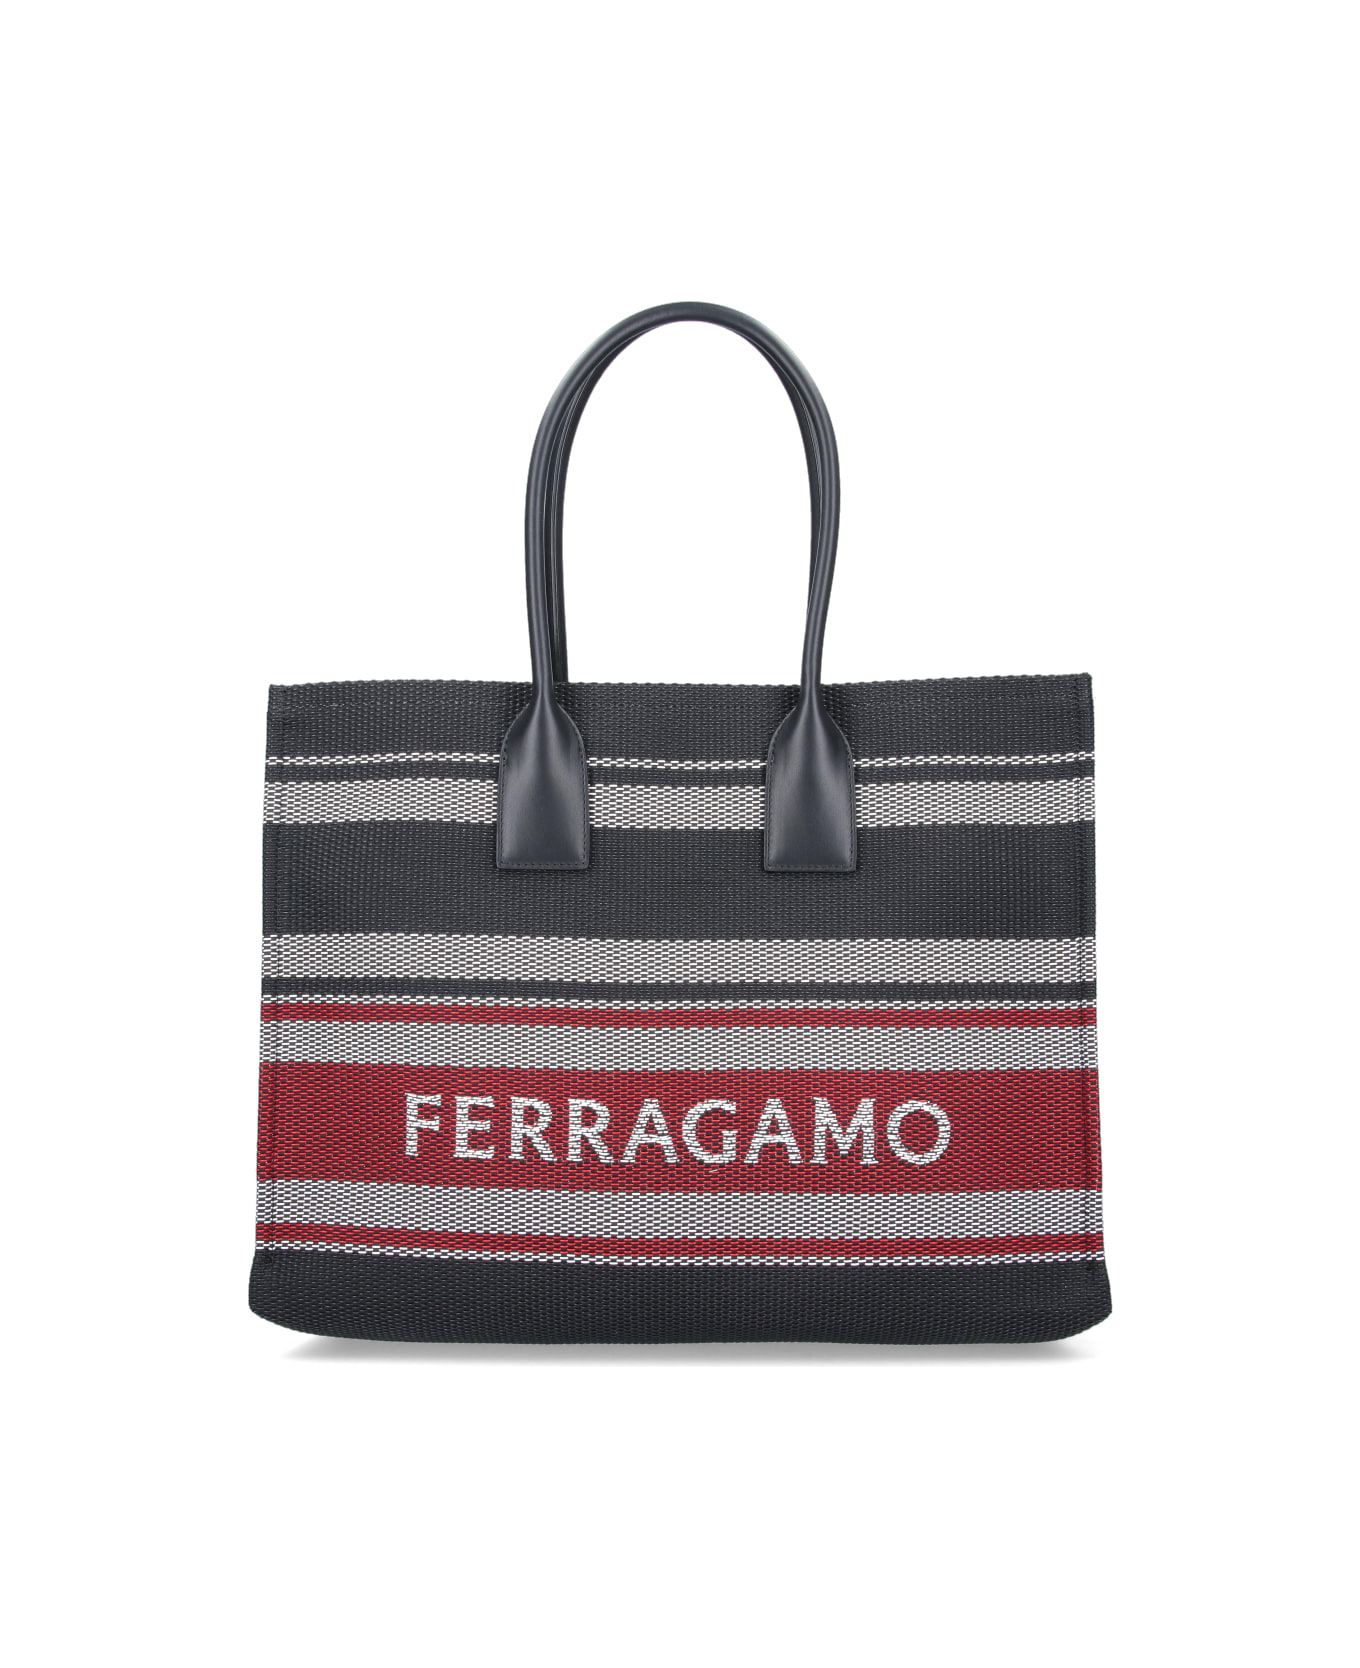 Ferragamo Logo Tote Bag - Black, red バッグ